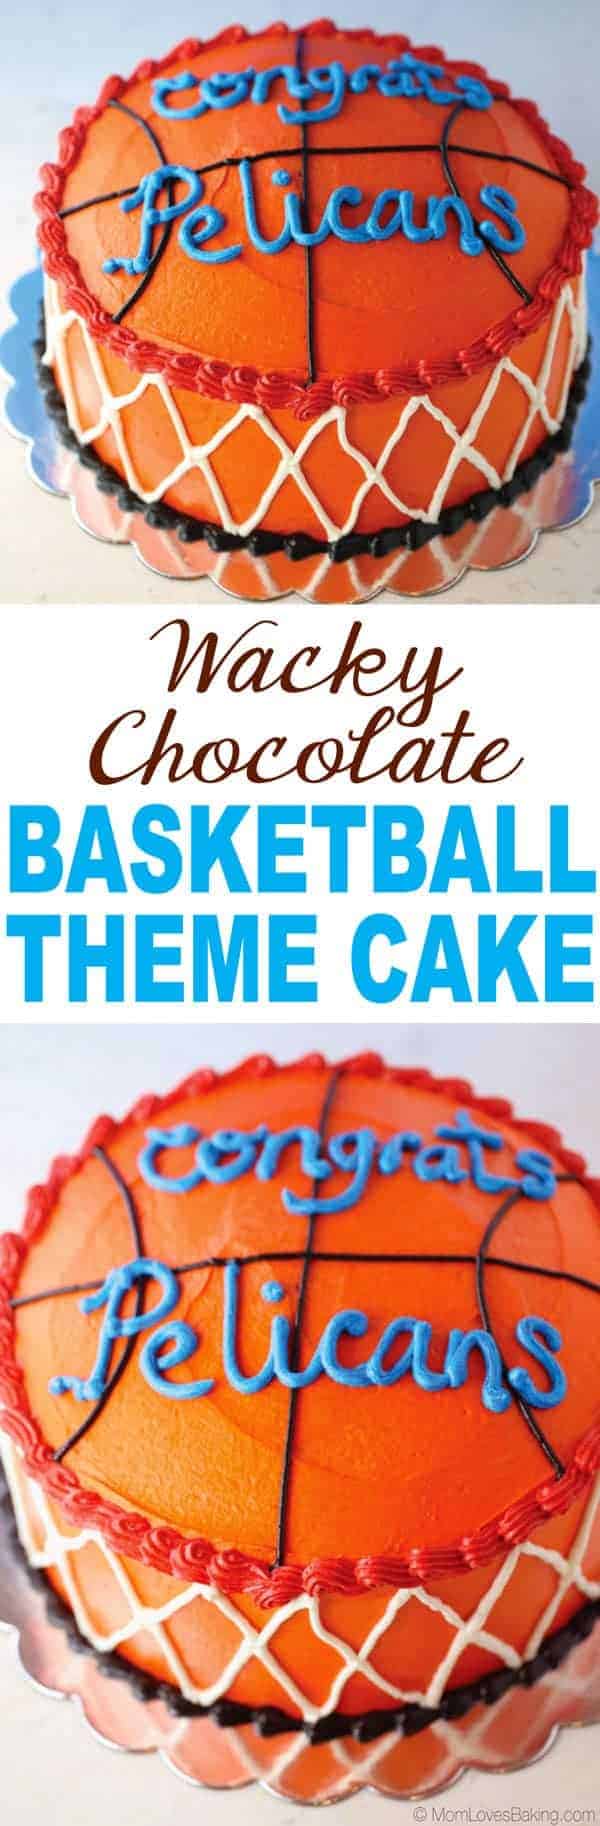 Wacky-Chocolate-Basketball-Theme-Cake